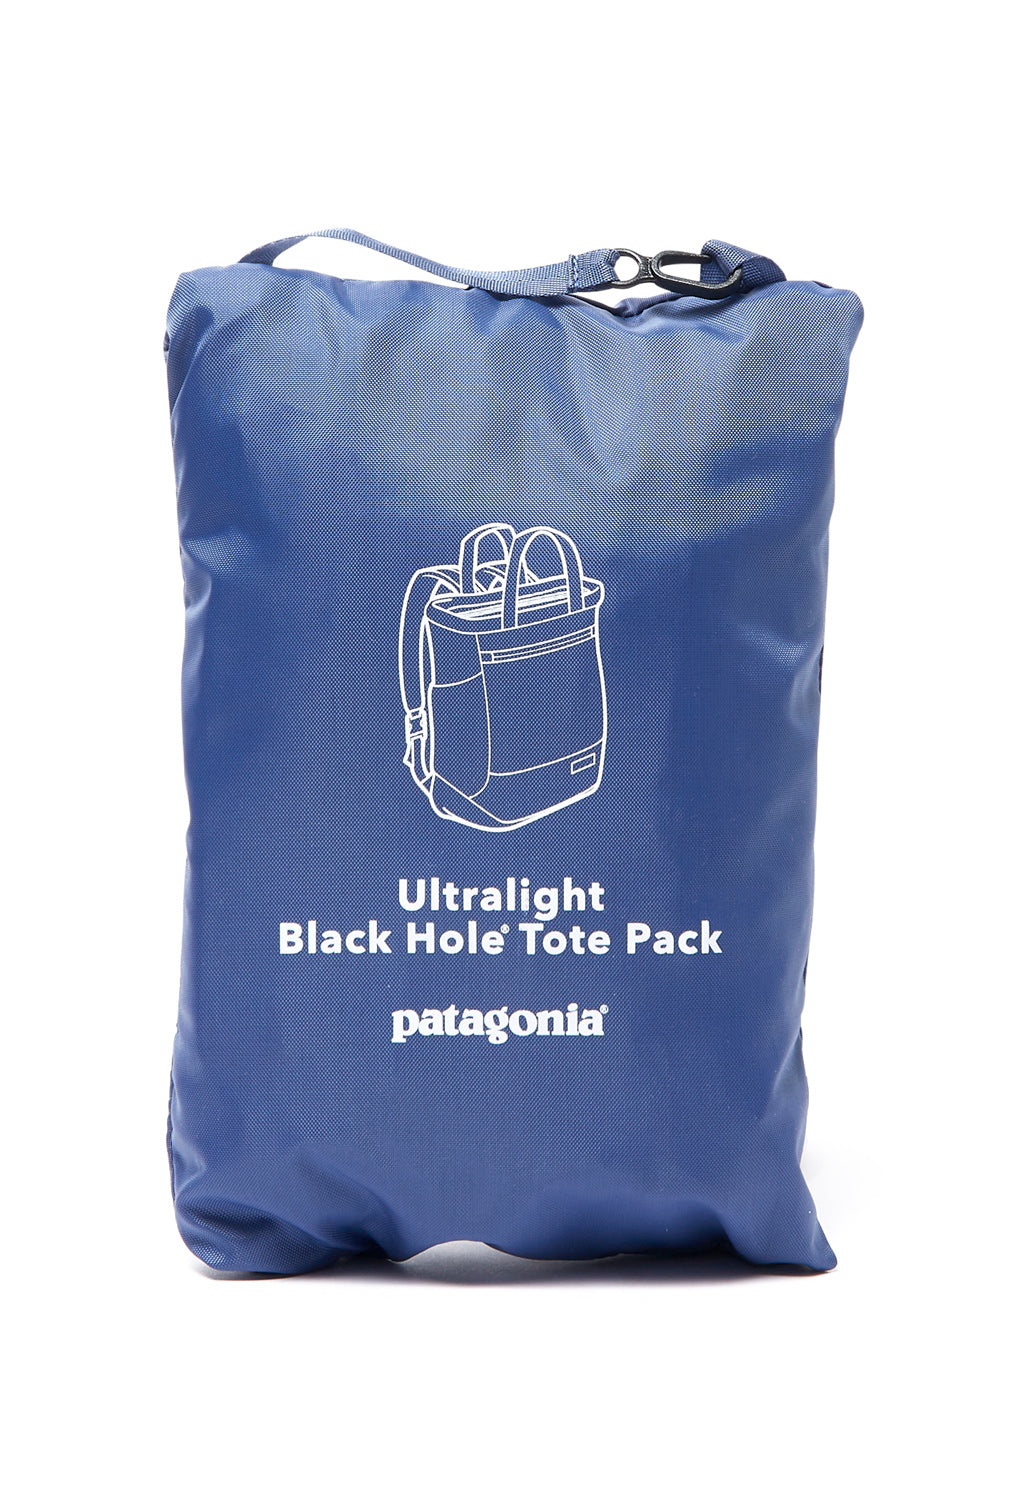 Patagonia Ultralight Black Hole Tote Pack - Fresh Teal